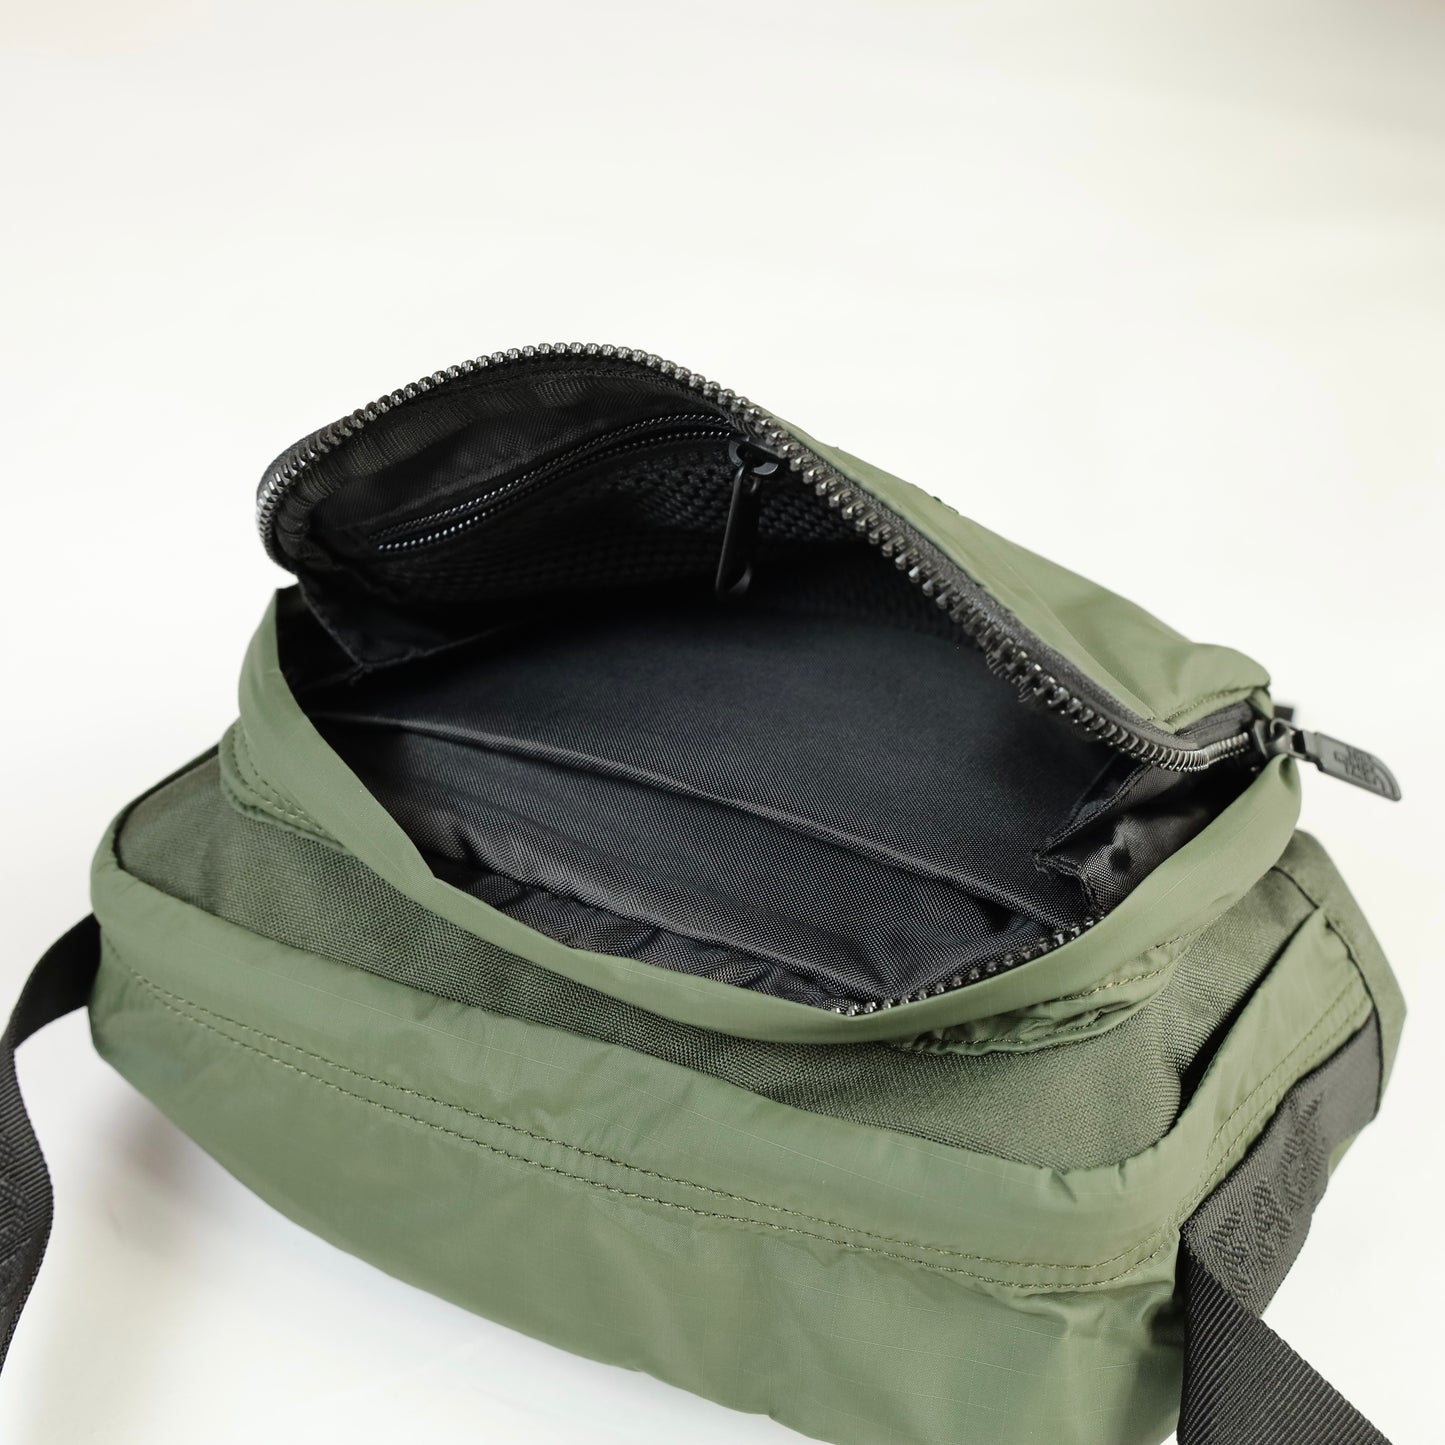 CORDURA Nylon Shoulder Bag - OLIVE